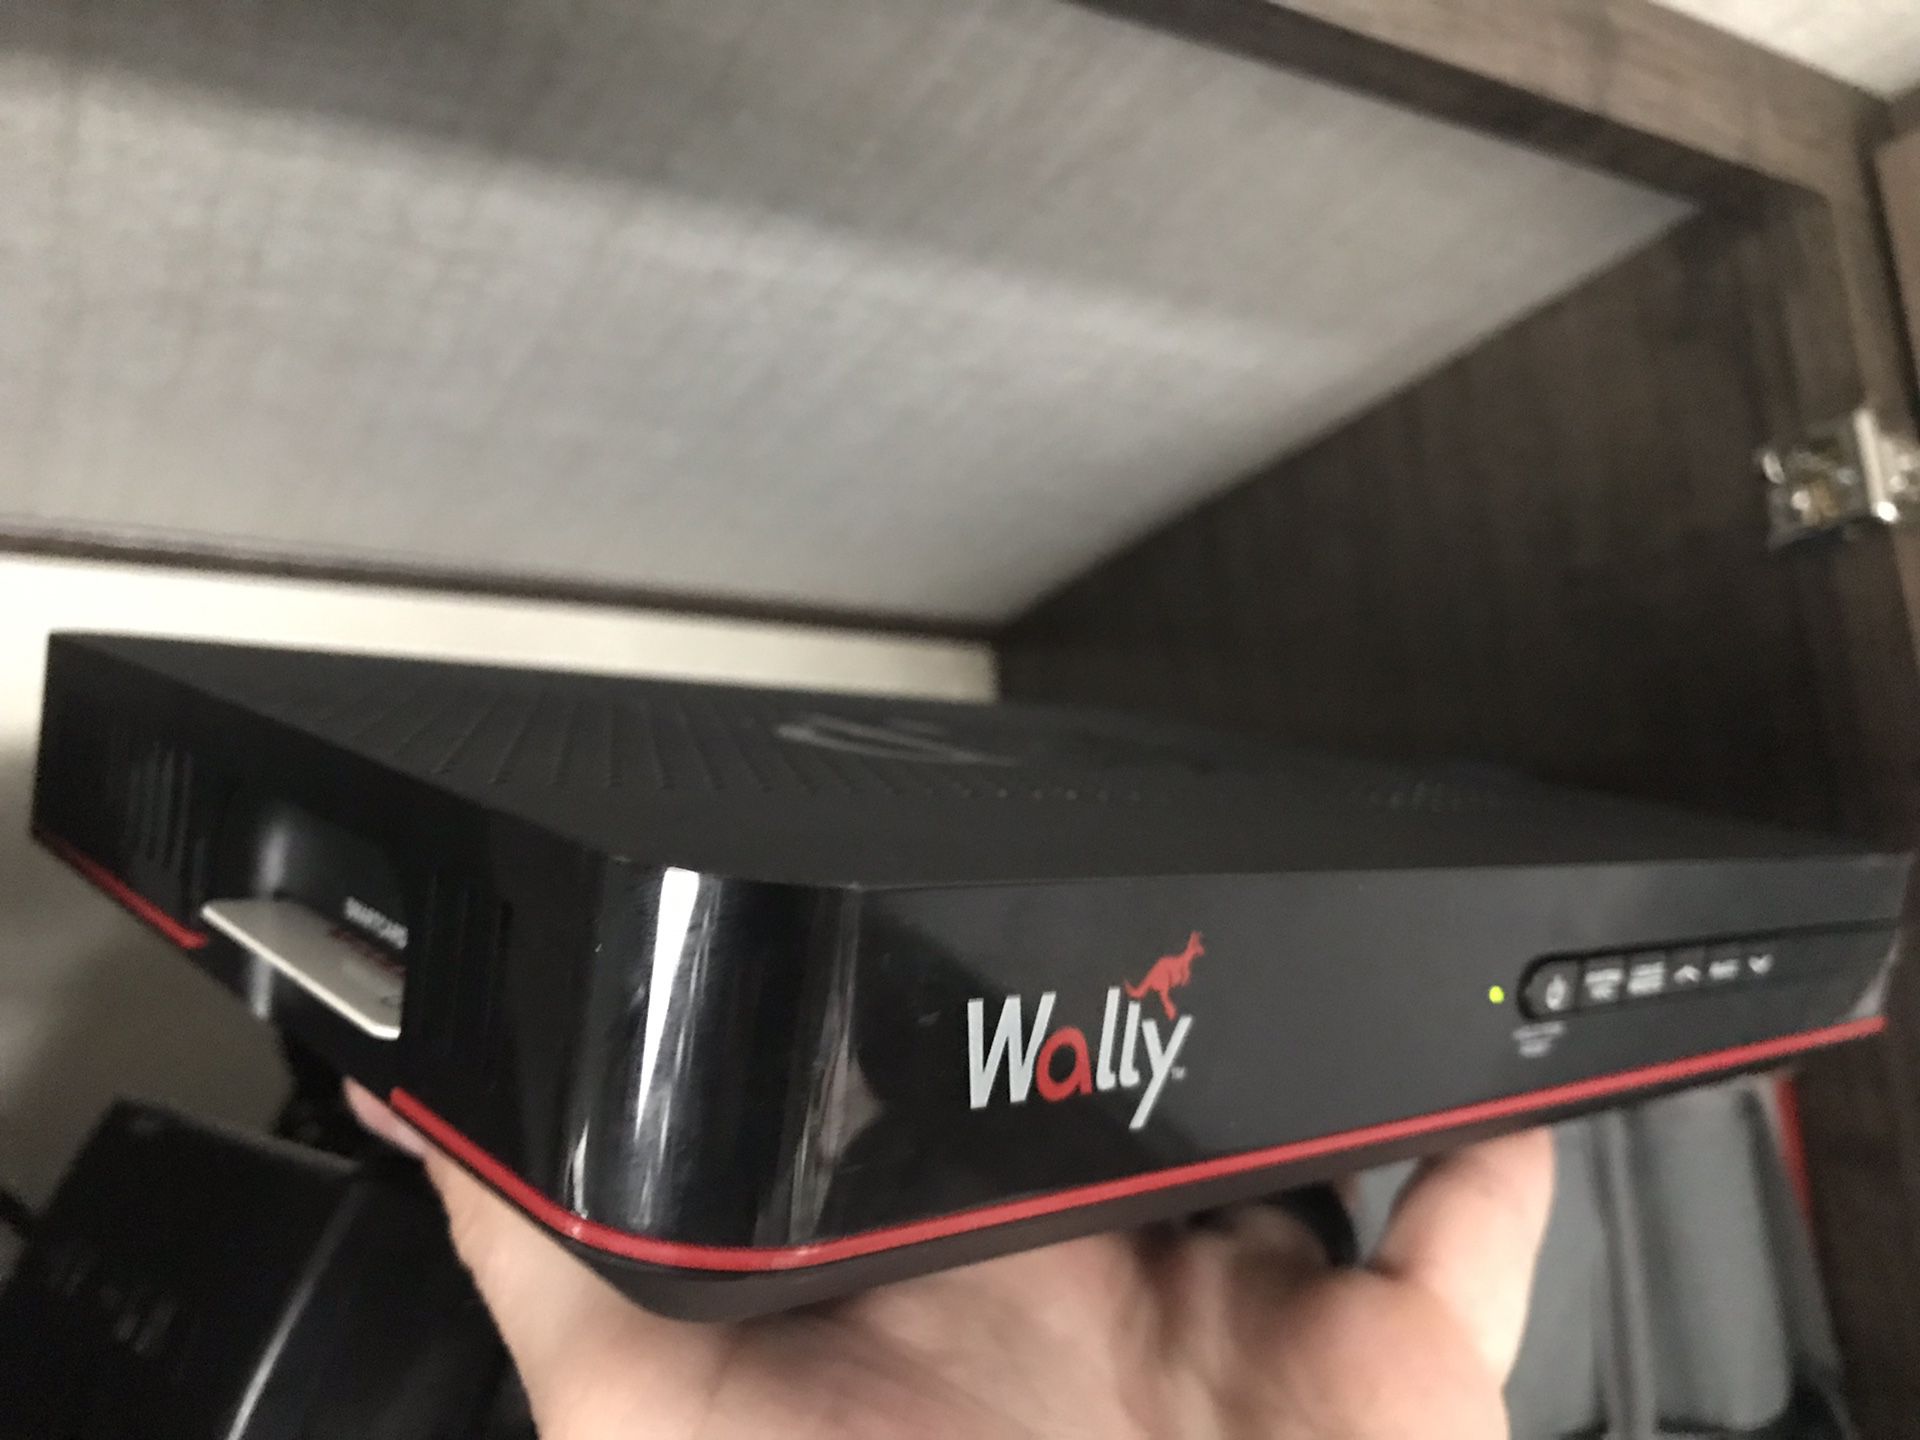 Wally receiver w/ remote